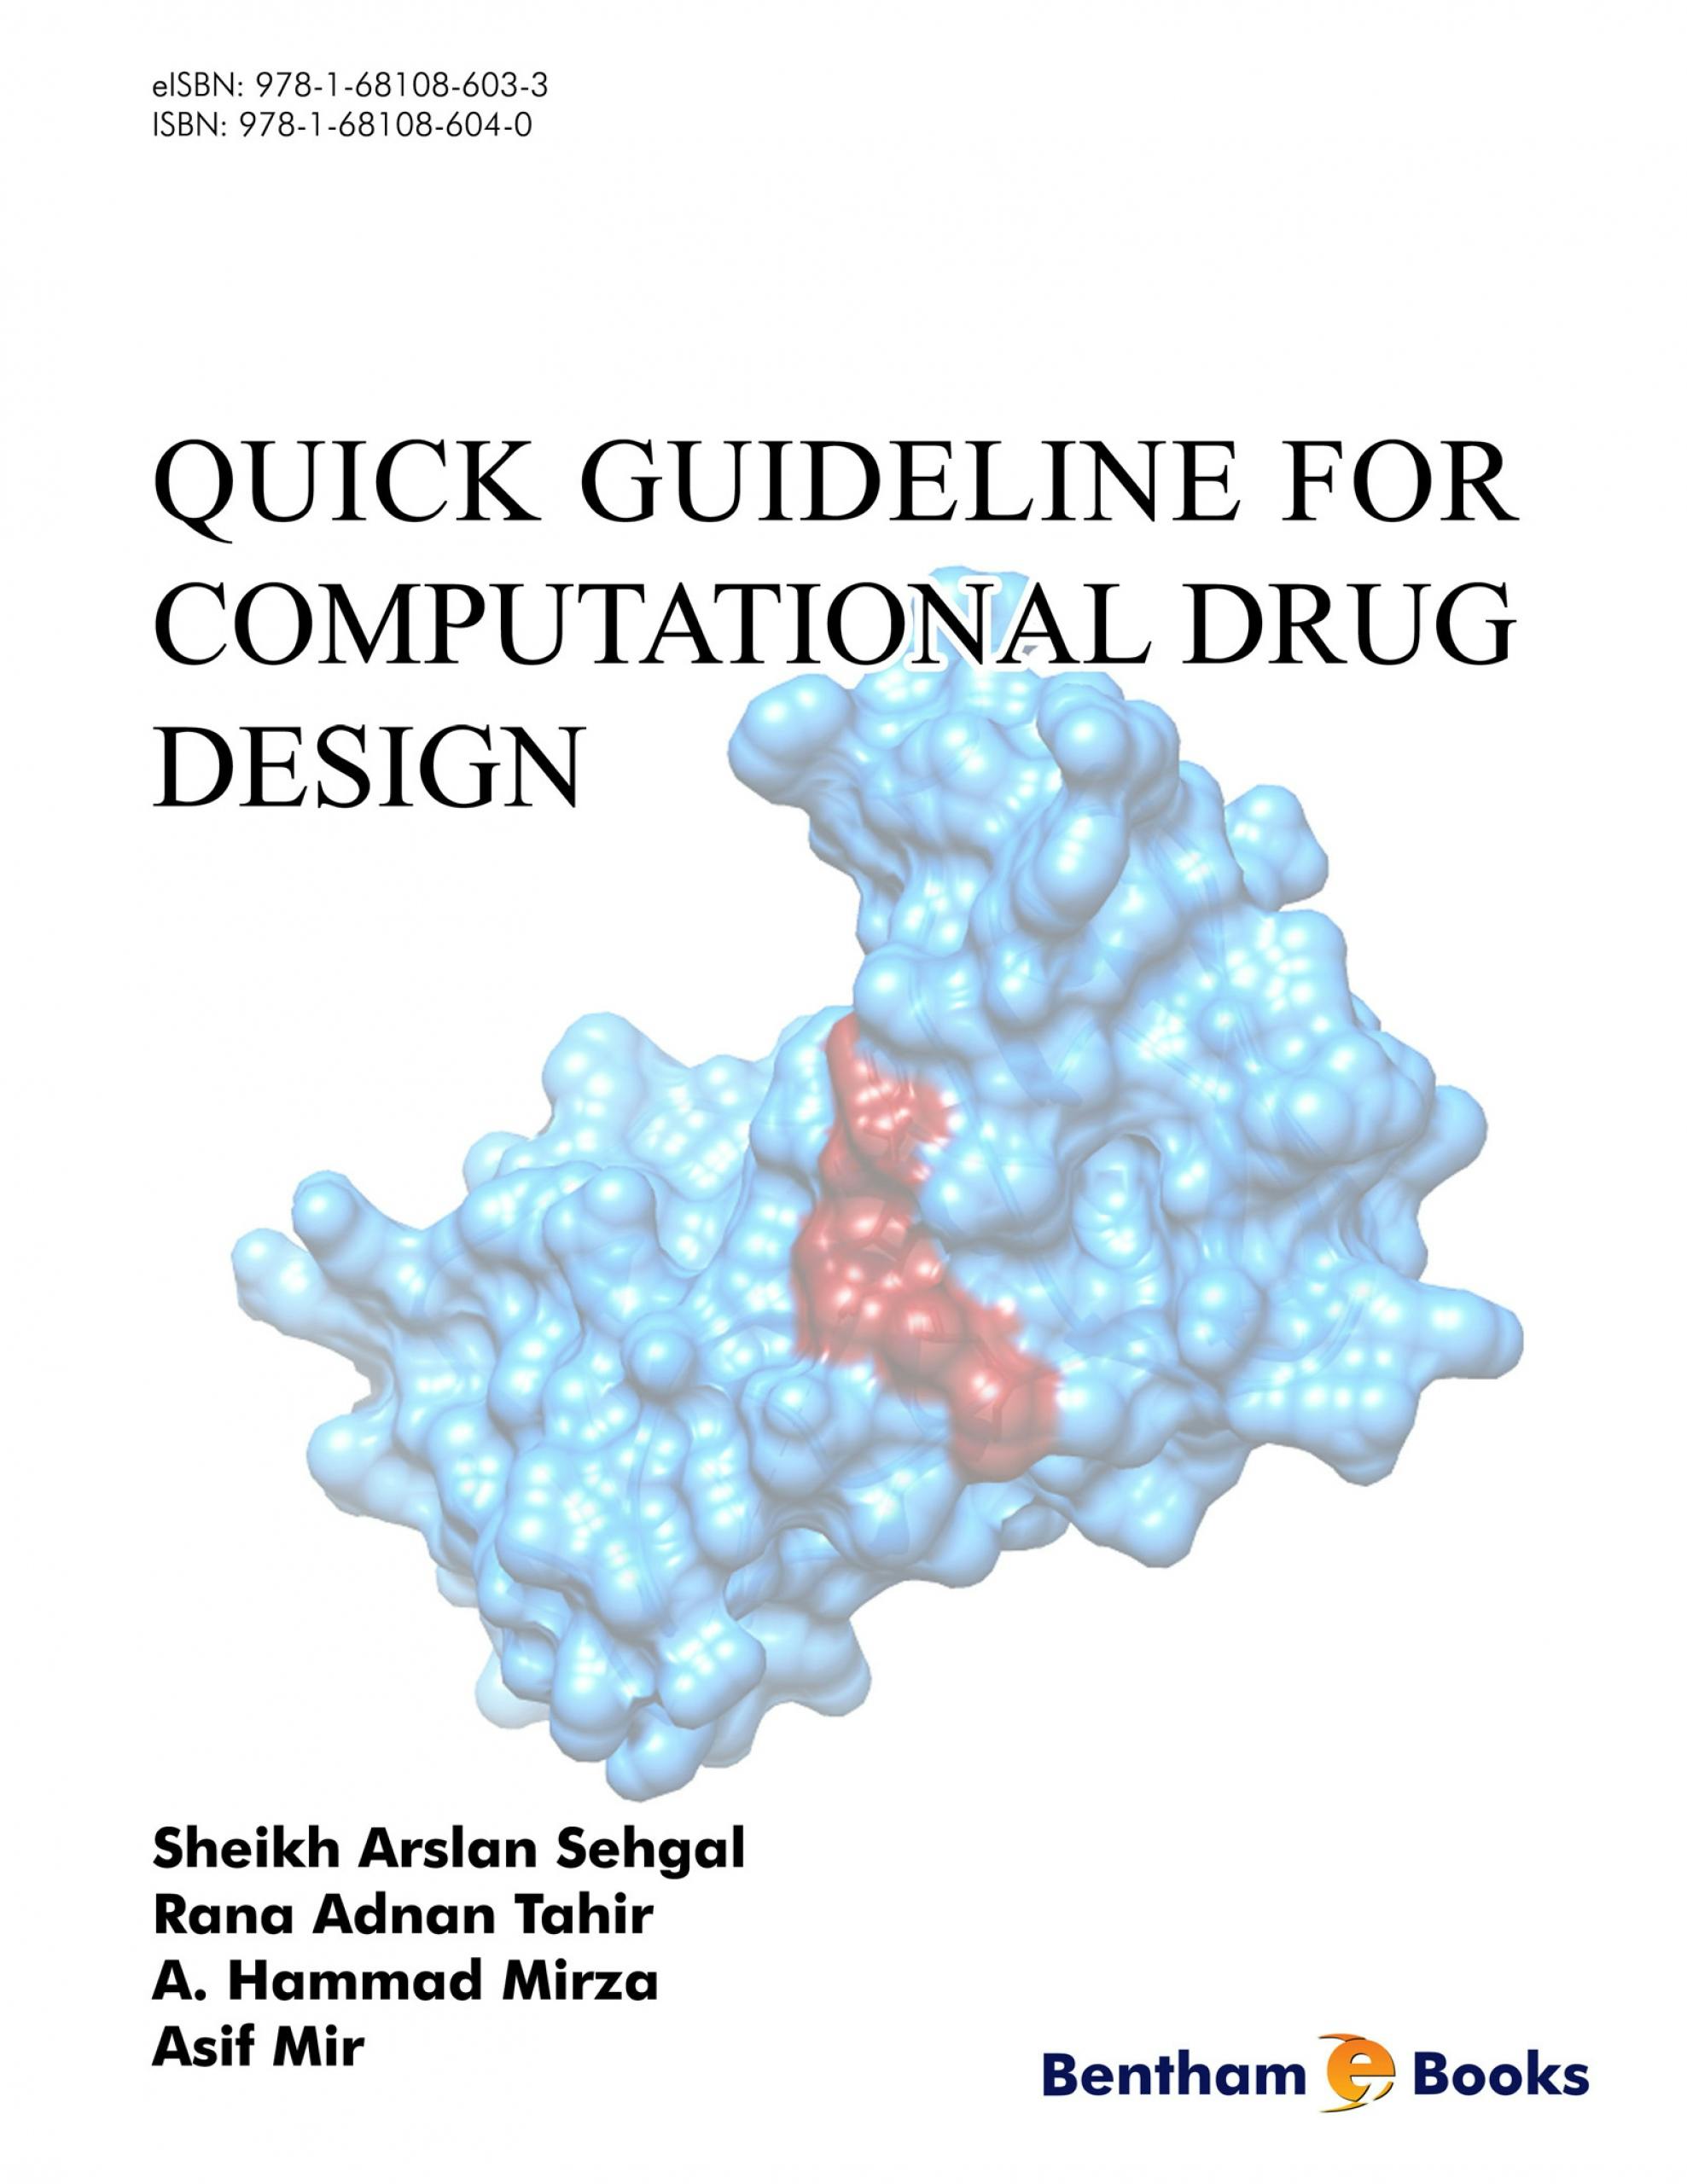 Quick Guideline for Computational Drug Design - Sheikh Arslan Sehgal, Rana Adnan Tahir, A. Hammad Mirza